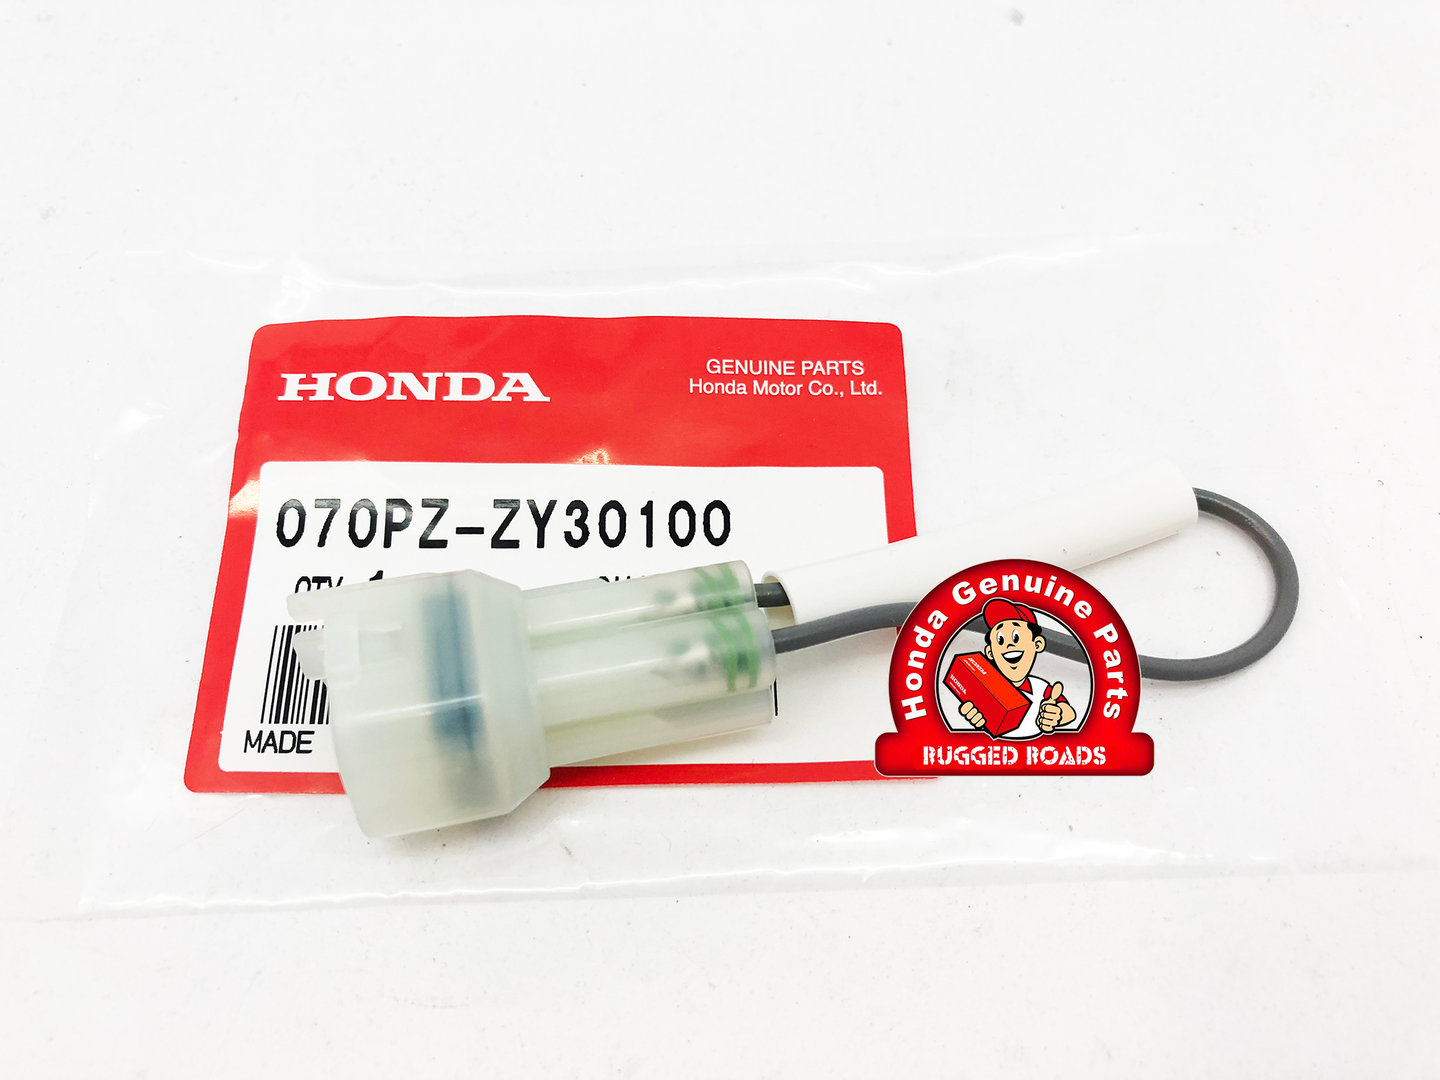 Honda SCS Service Connector 070MZ-0010300 CBR 1000 RR-R SP  CRF 1100 Africa Twin